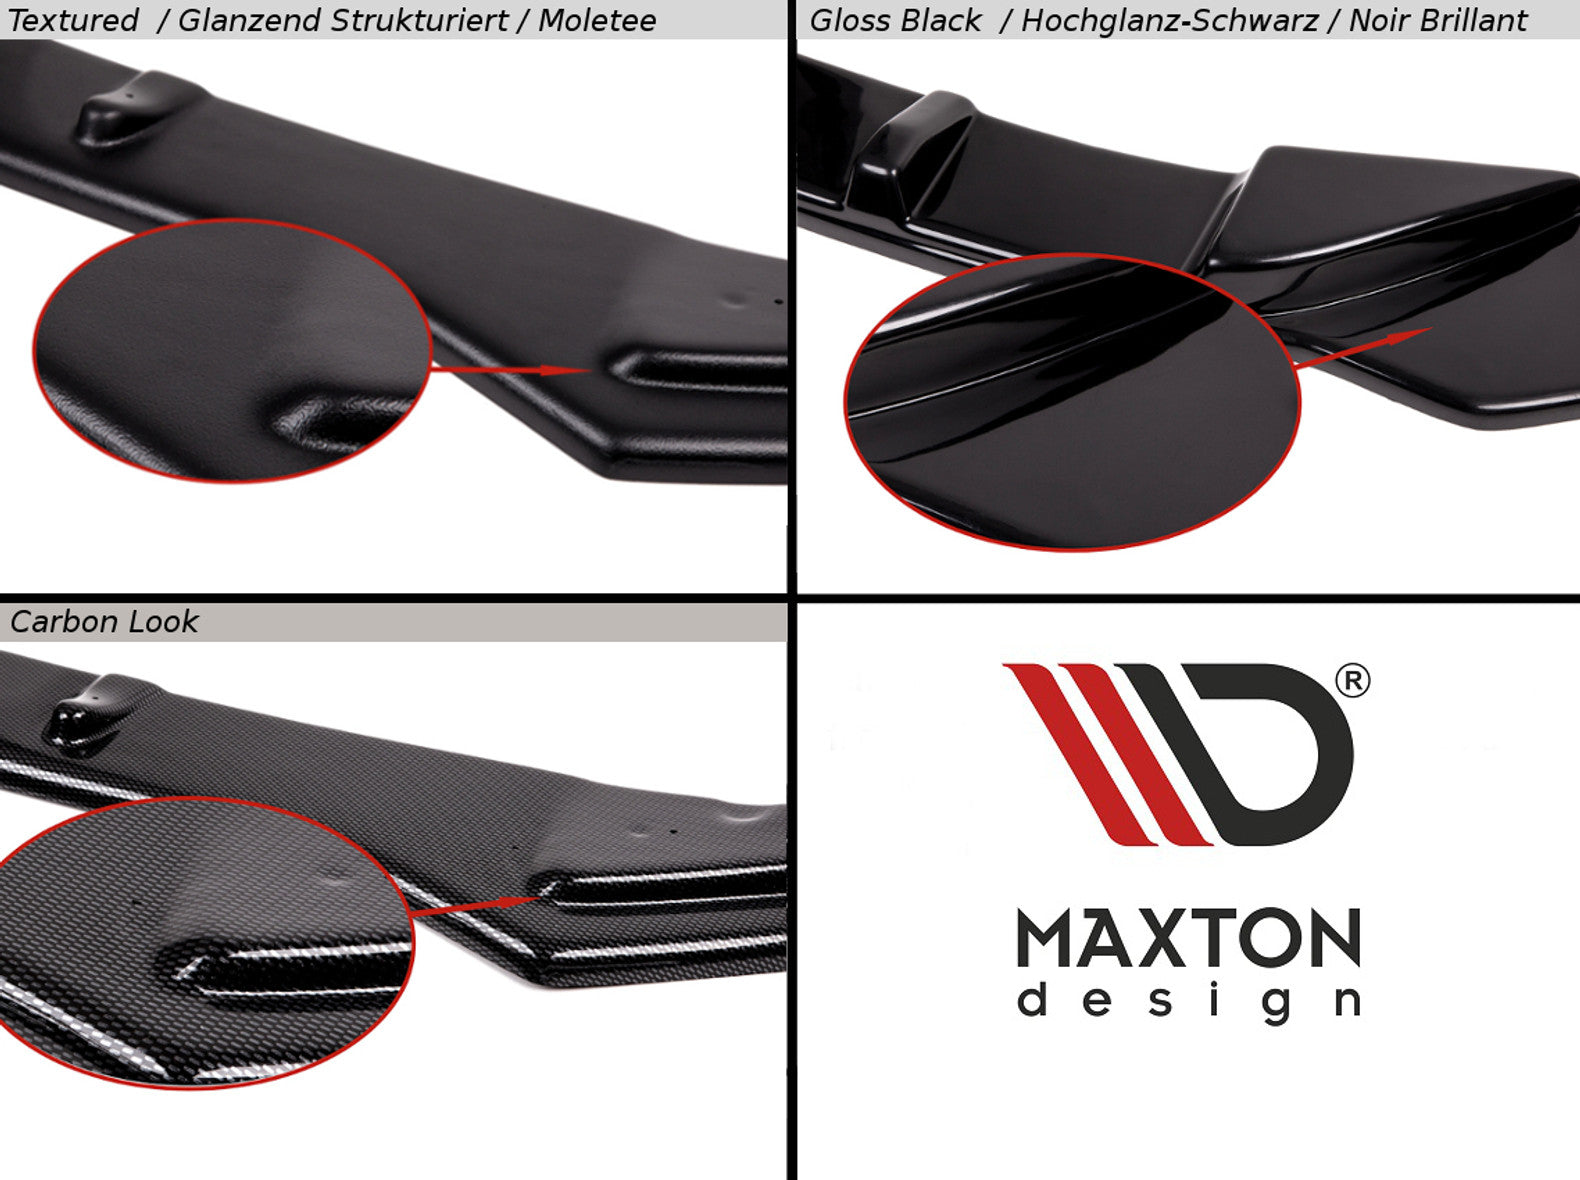 Maxton Design ignite performance